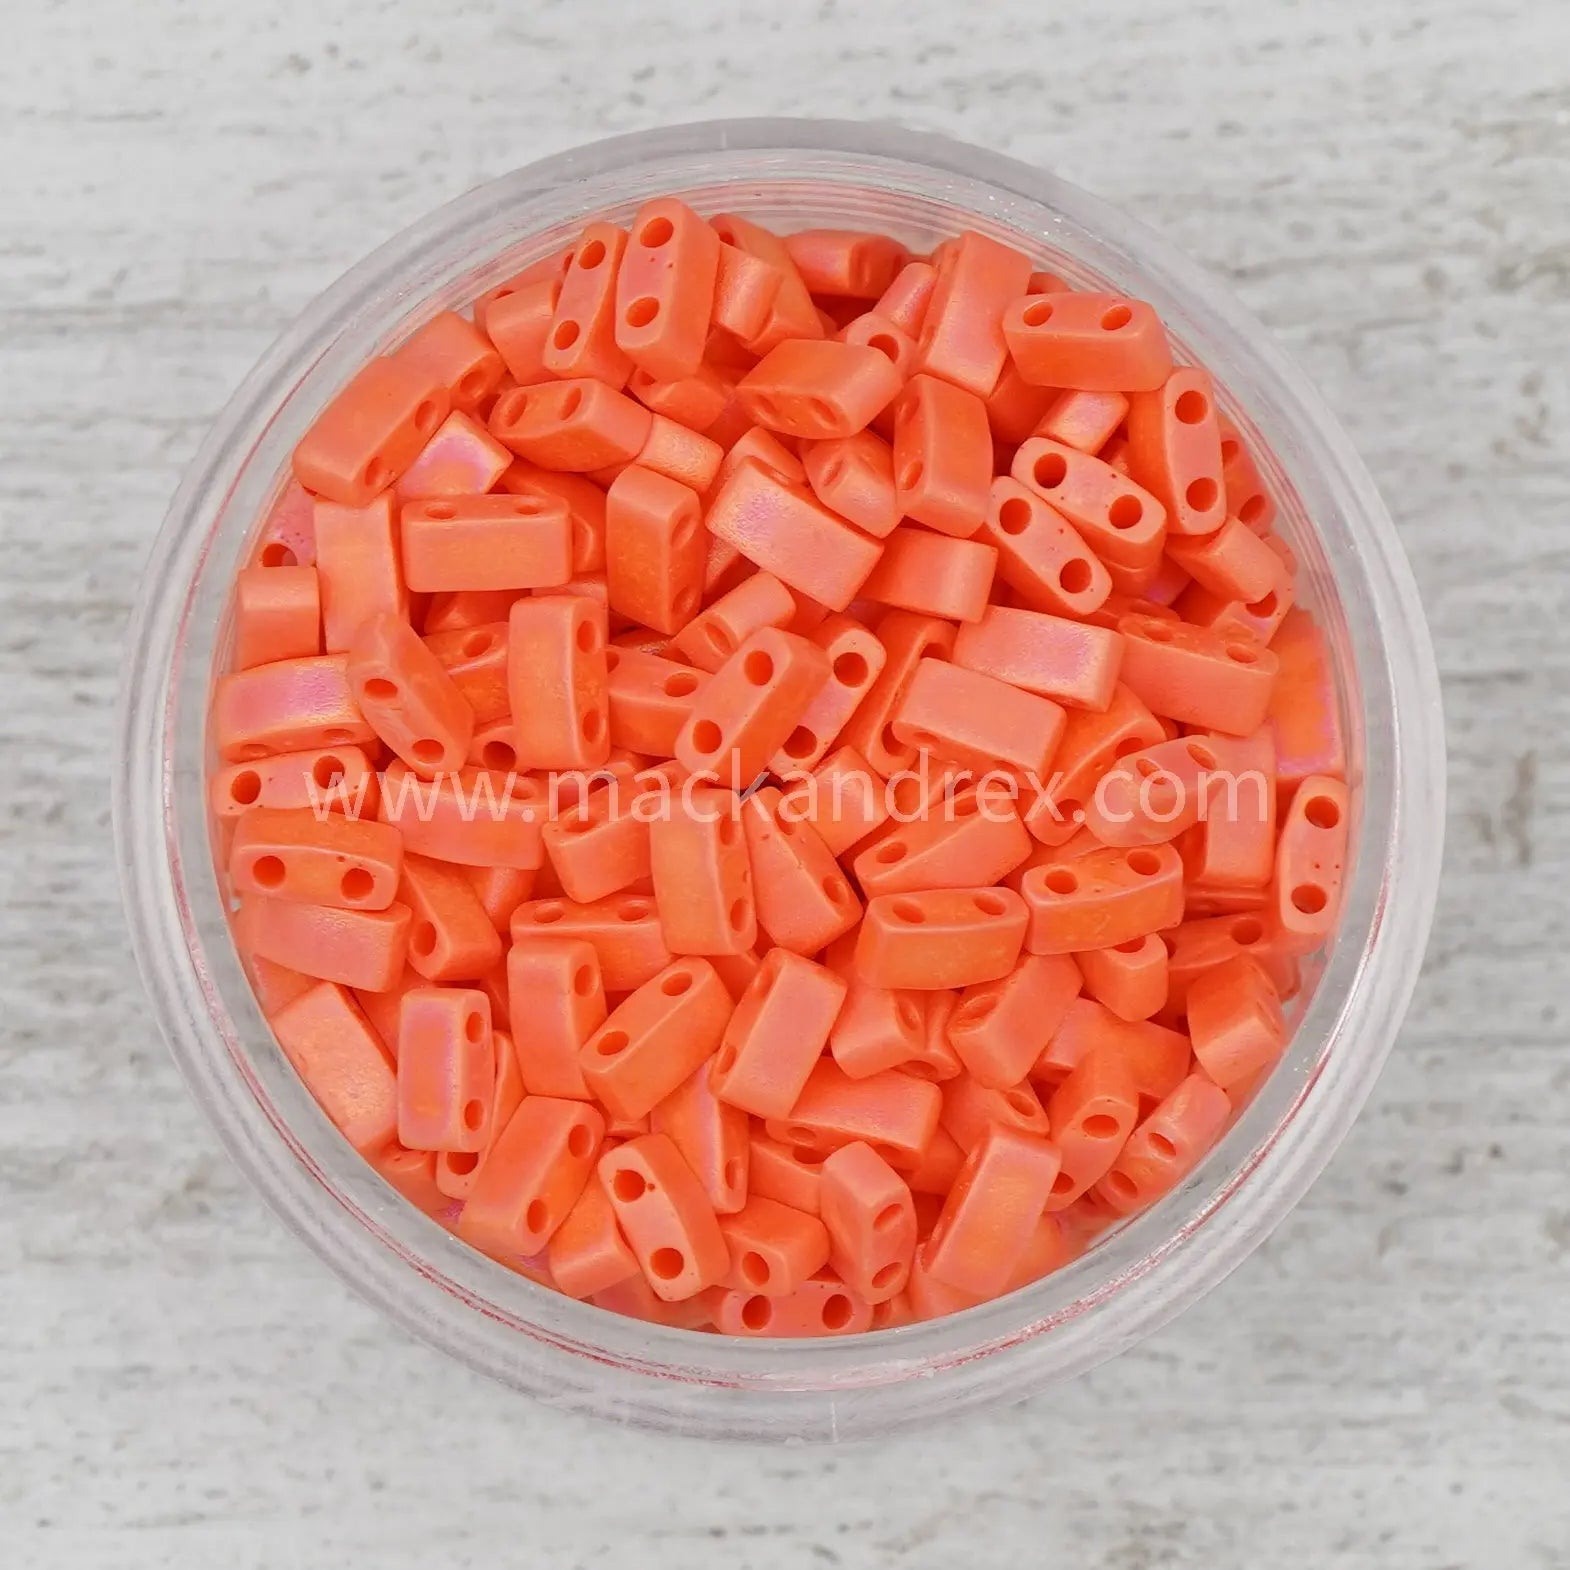 0406FR Tila Beads - Matte Orange/Coral - Mack & Rex